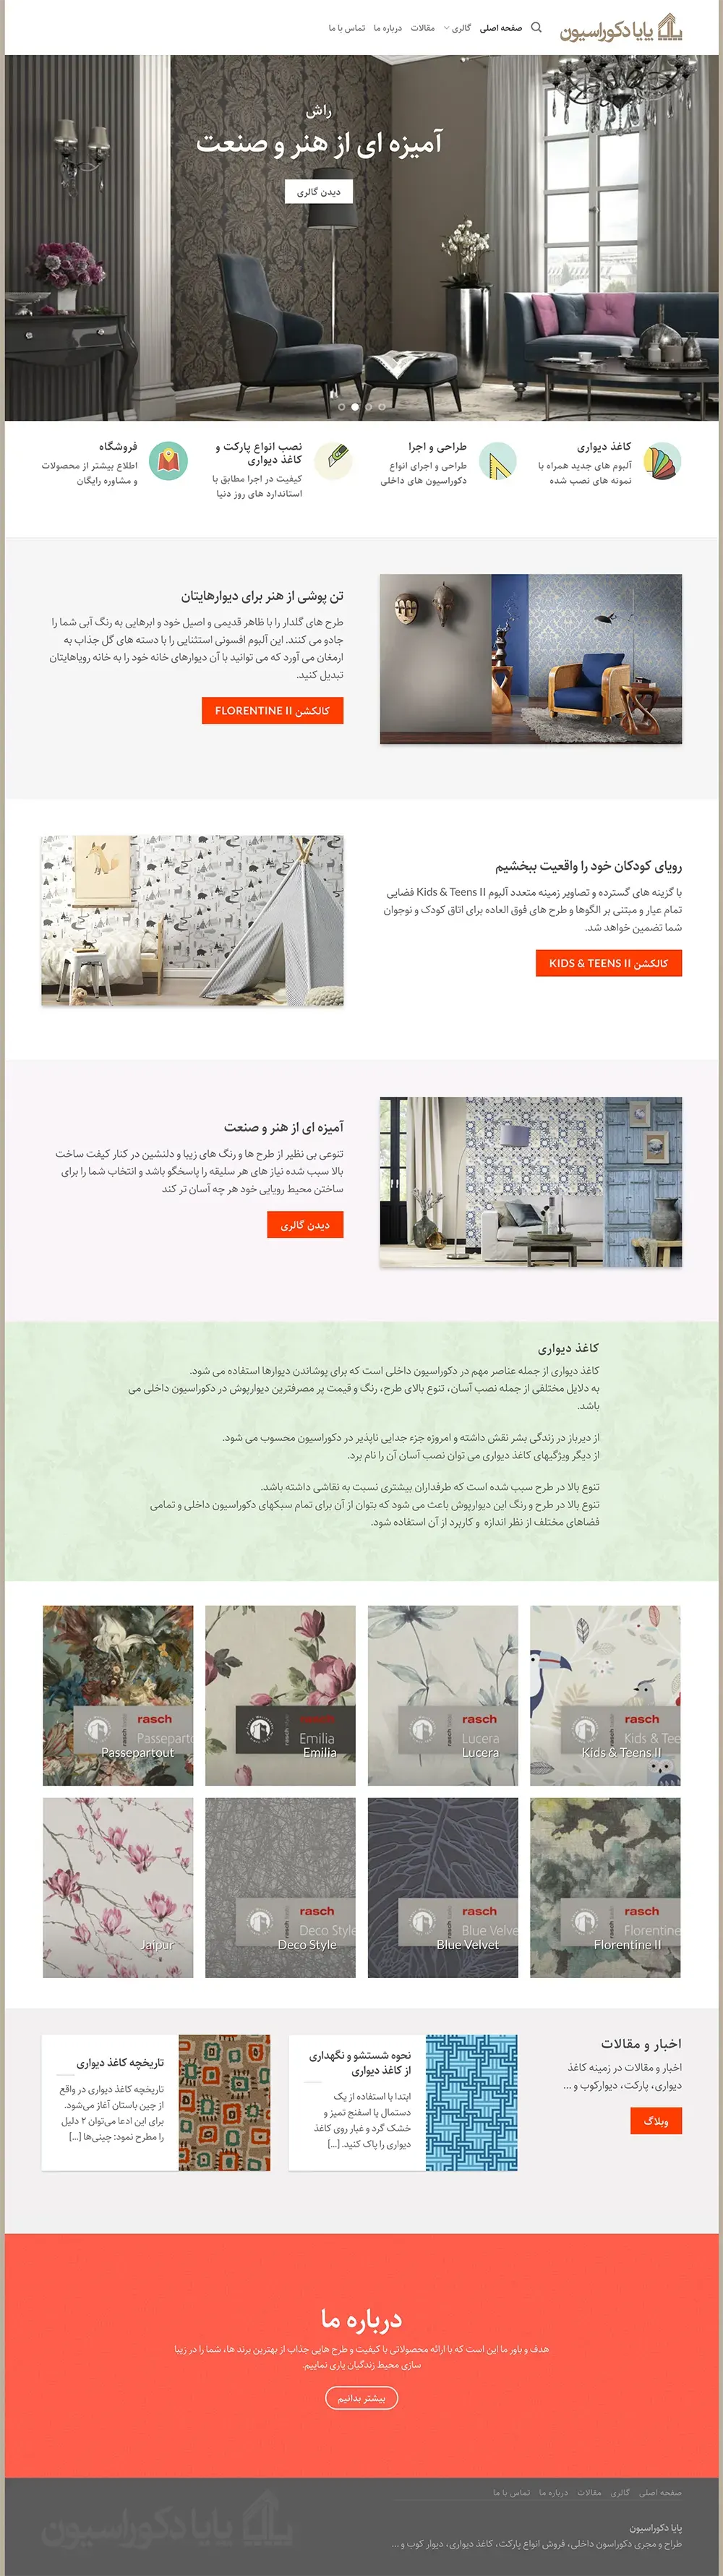 paya decor website screenshot